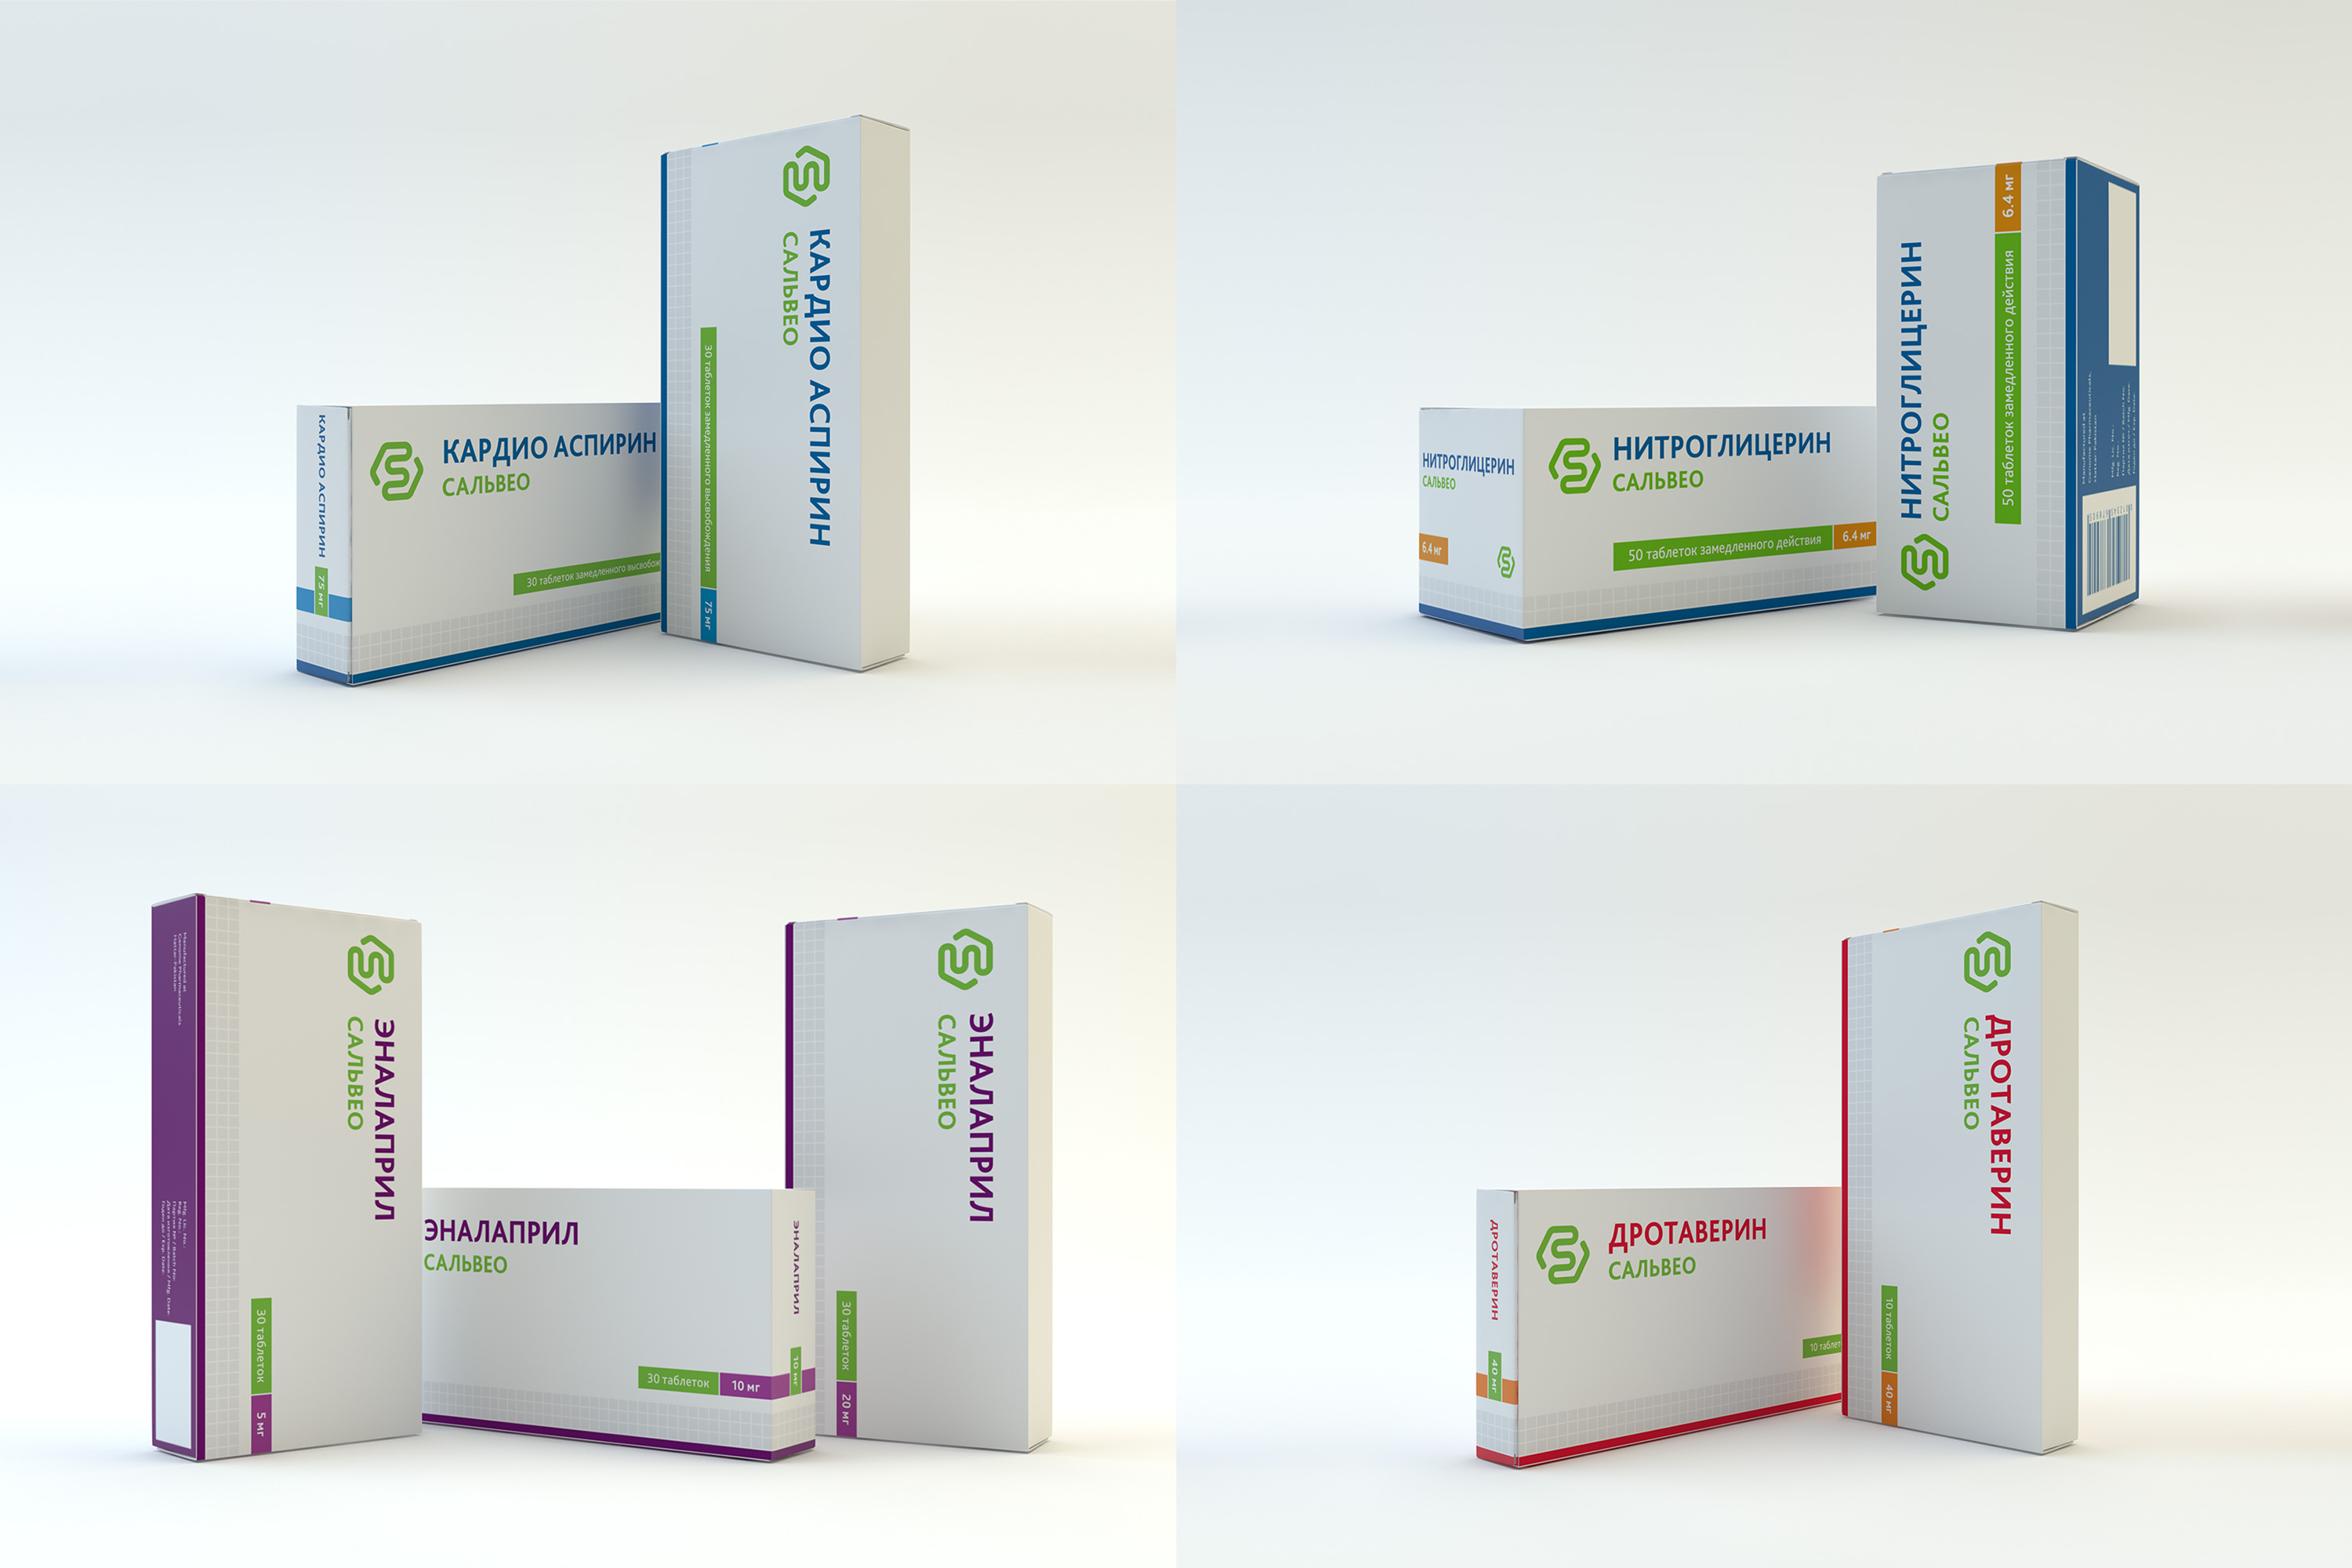 Salveo Pharma packaging